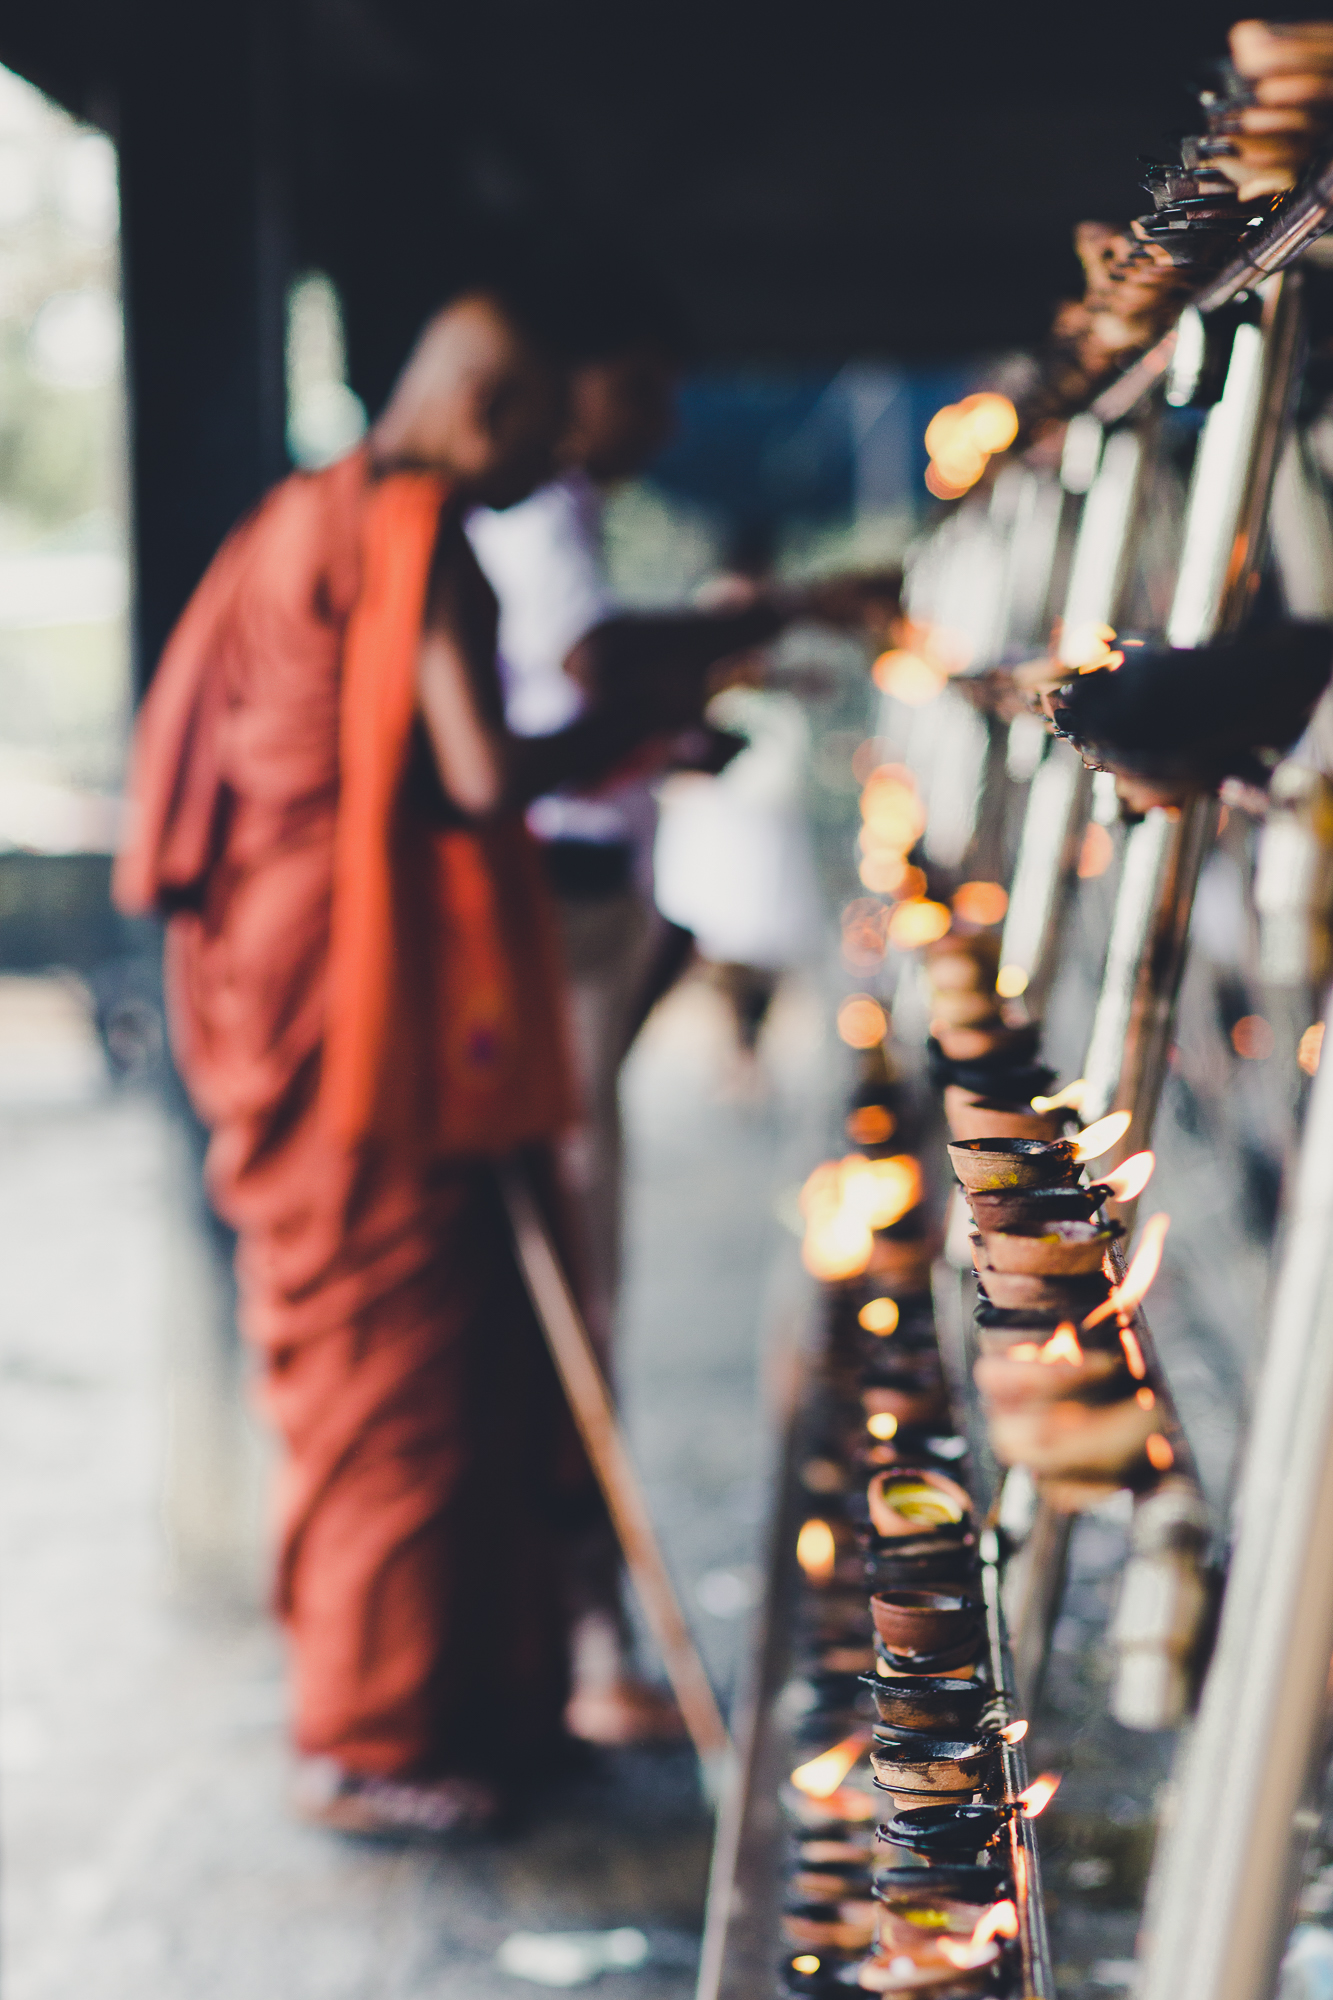 Bhuddist Monk lighting candles